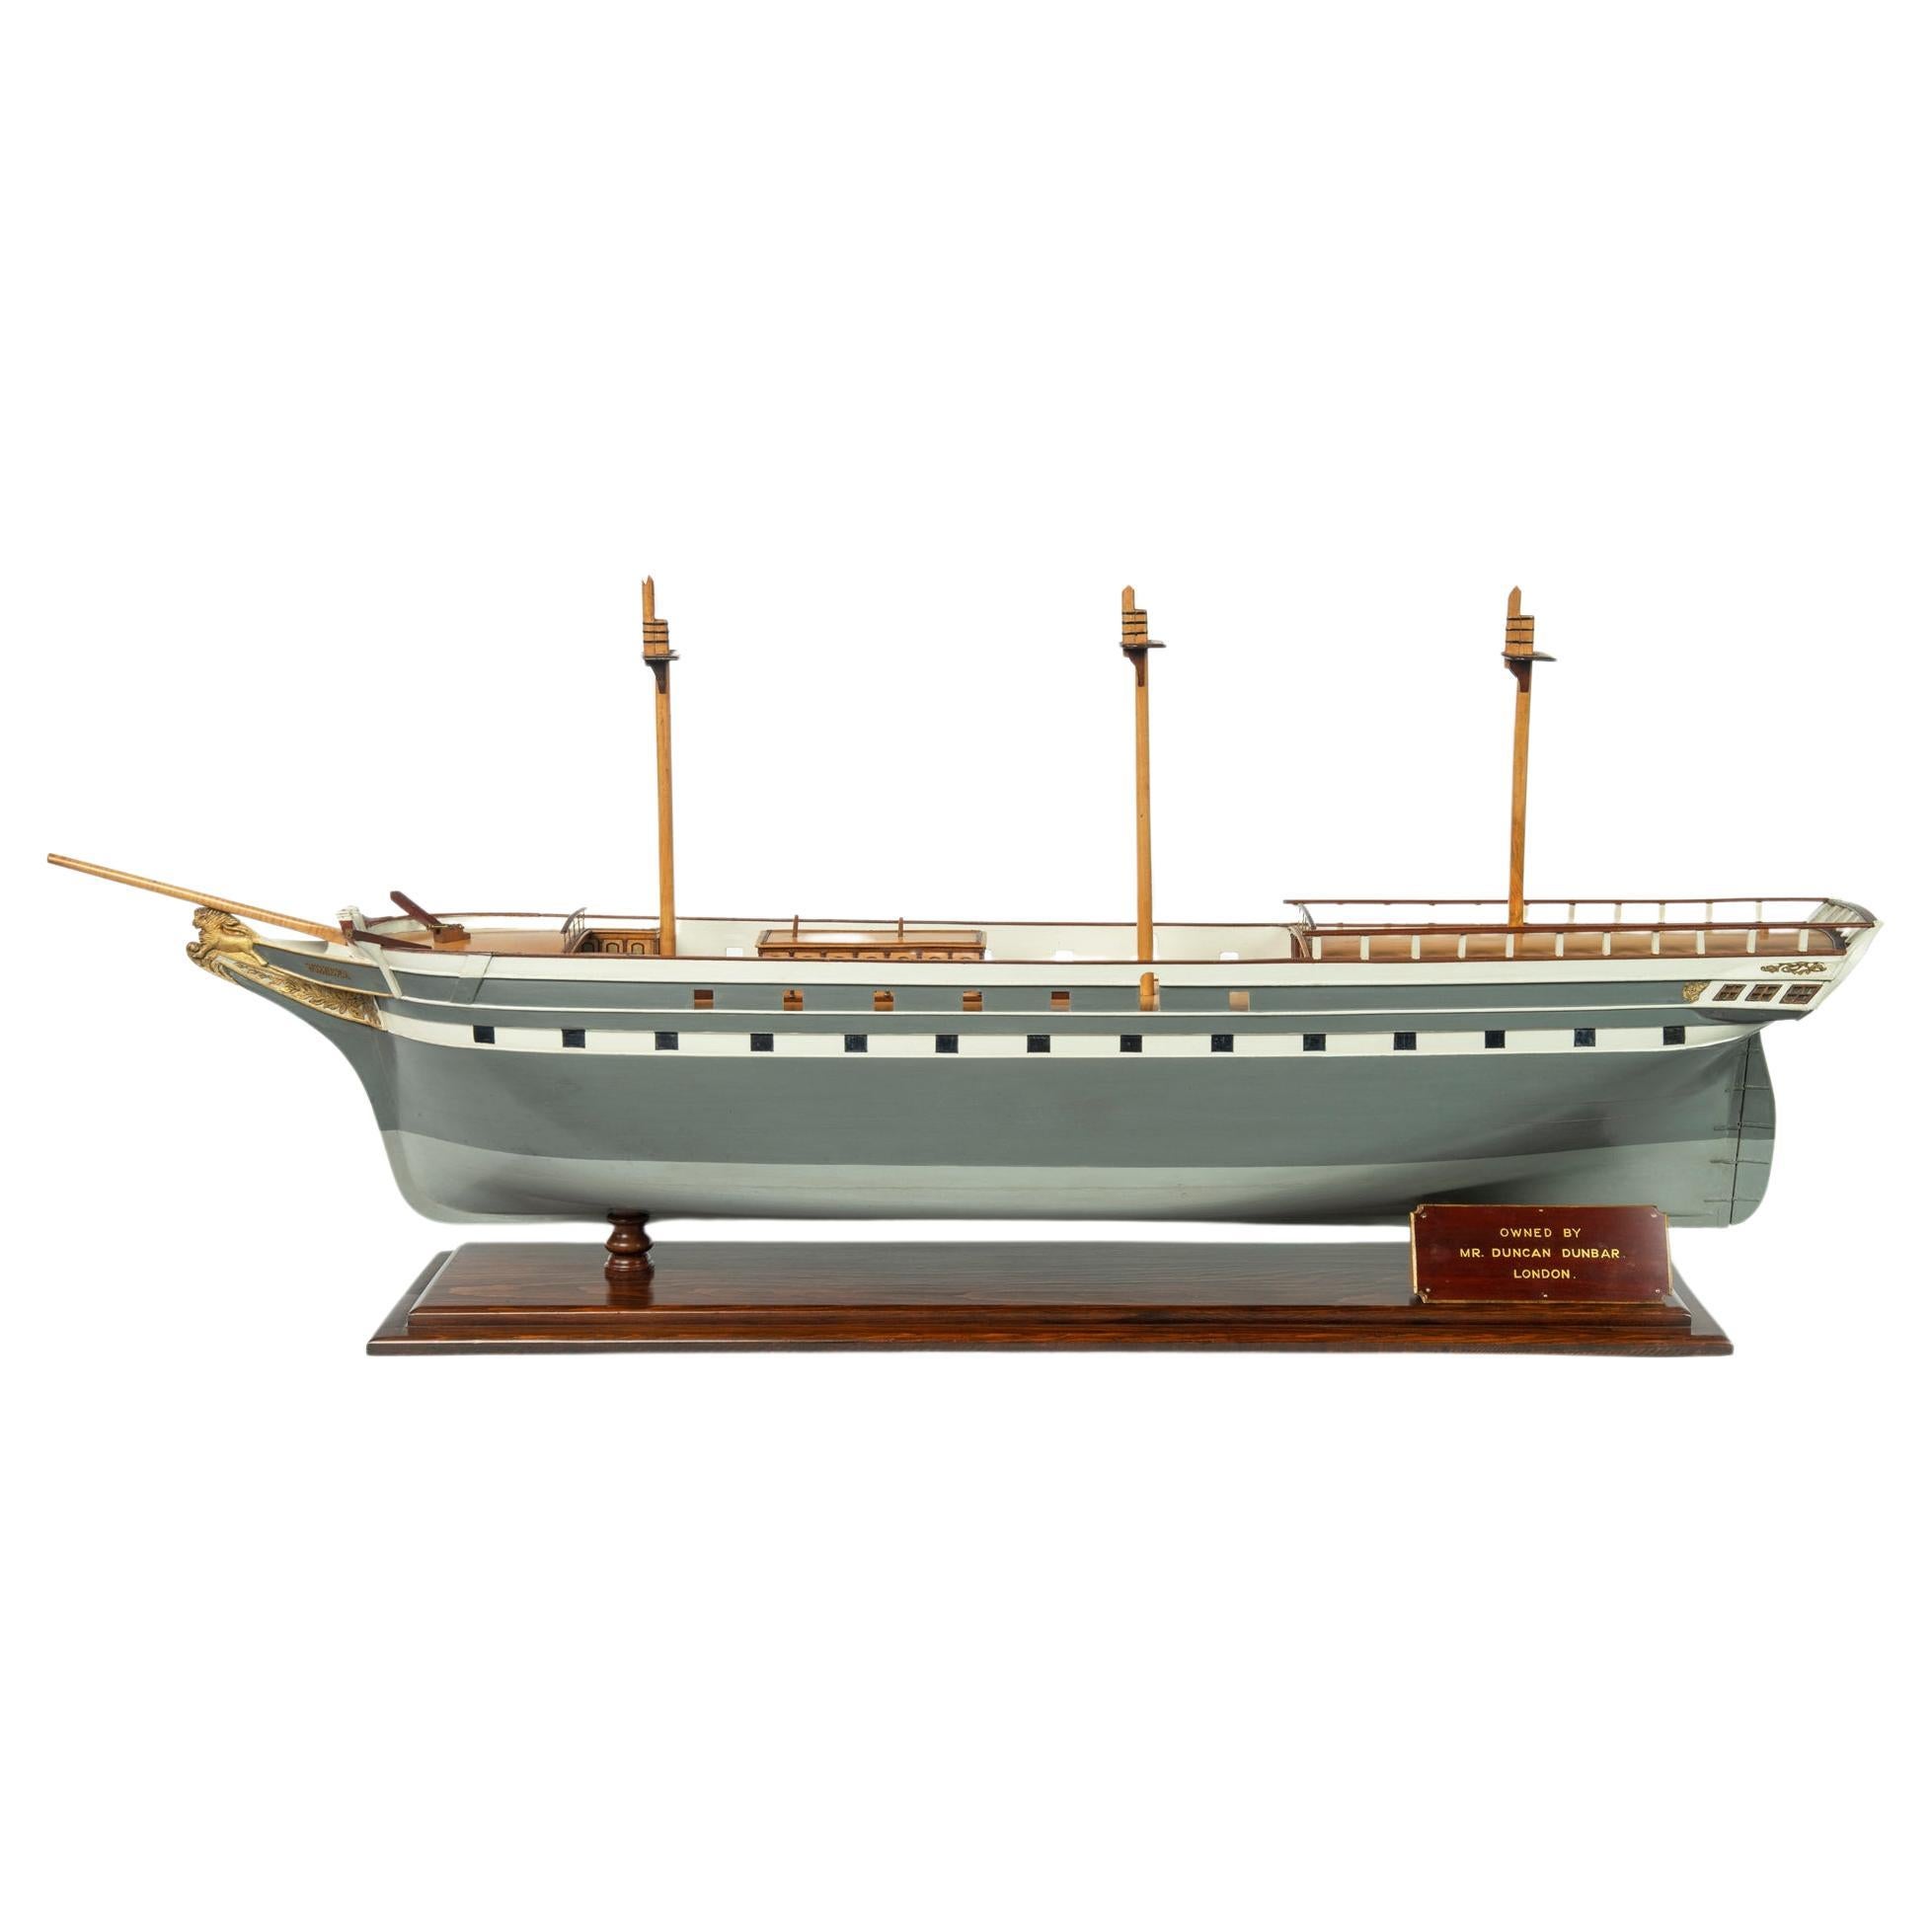 A fine model of sailing ship Vimiera built for Duncan Dunbar, 1851